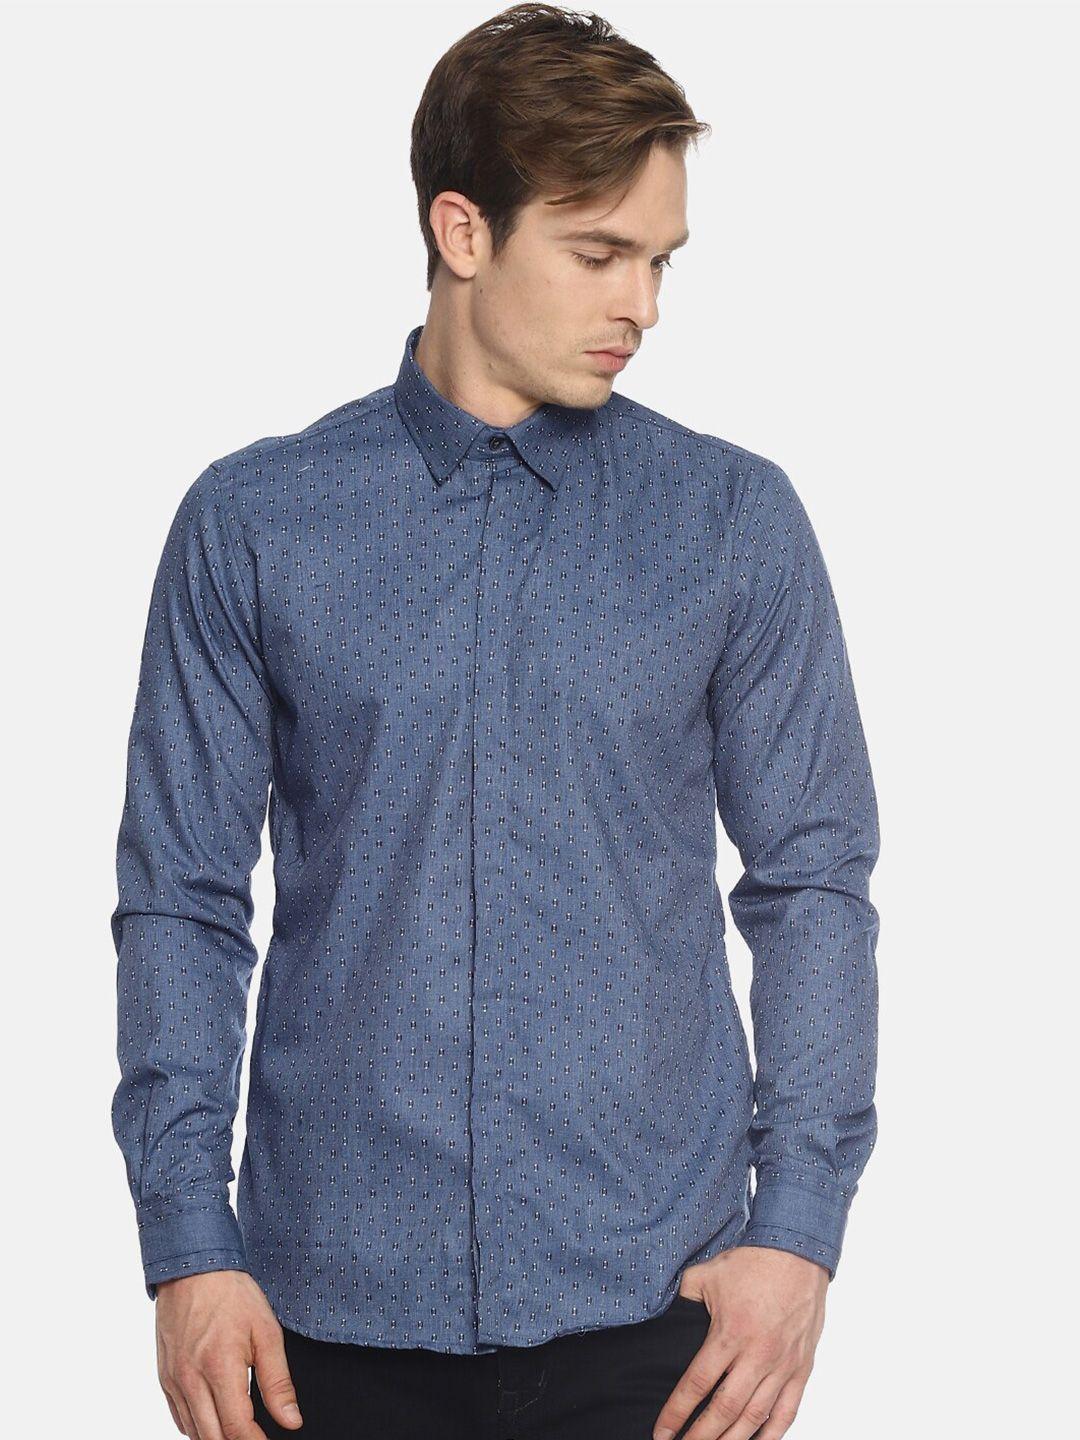 couper & coll men blue premium slim fit printed casual shirt